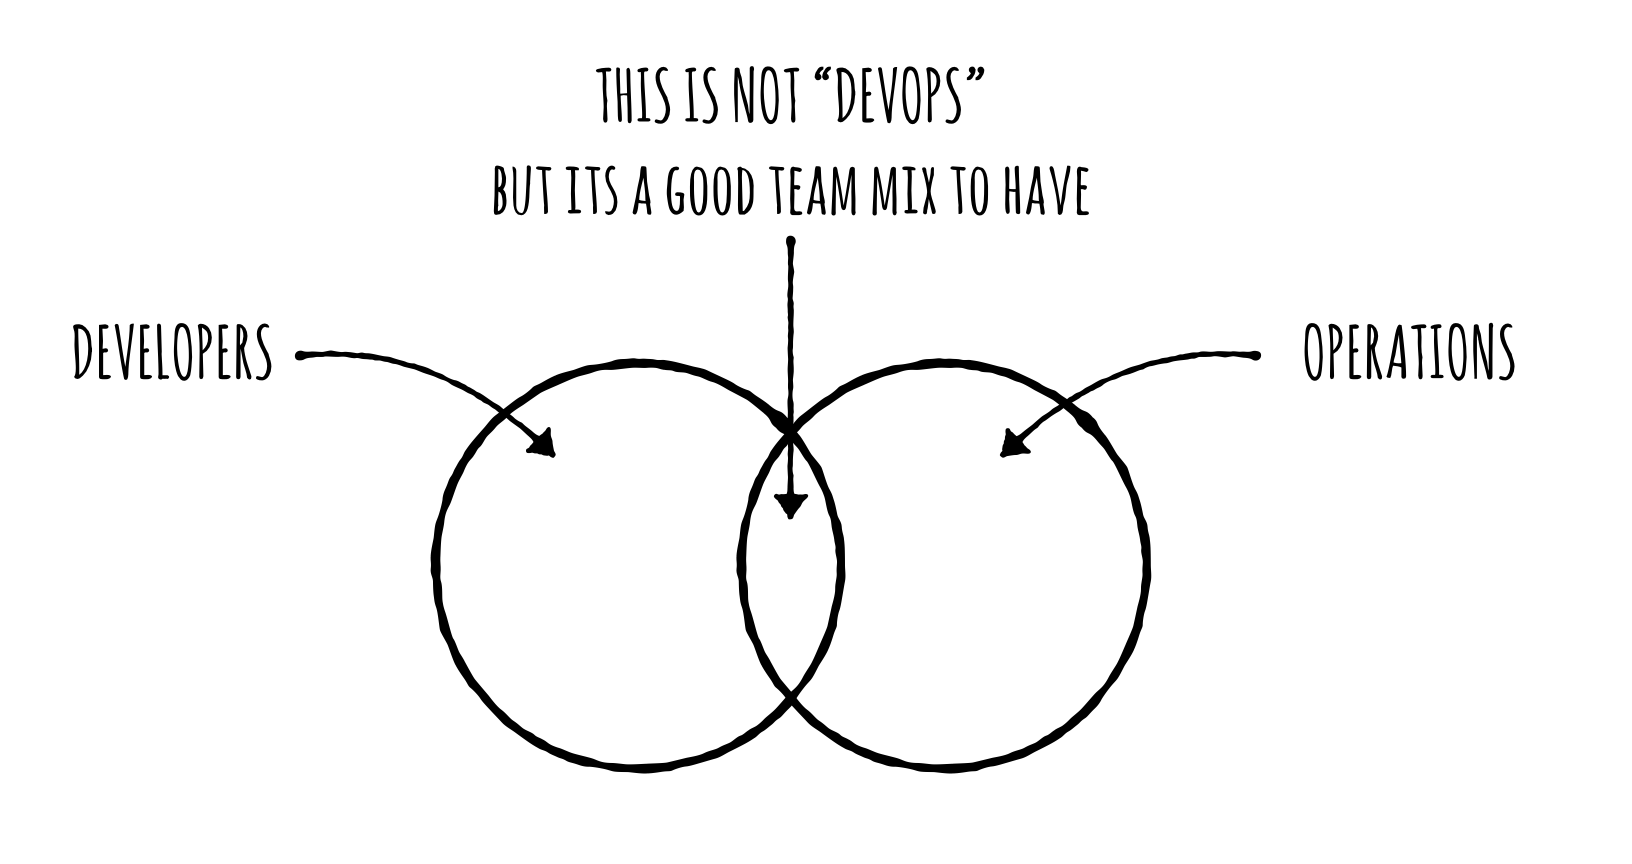 A good team is a cross functional team